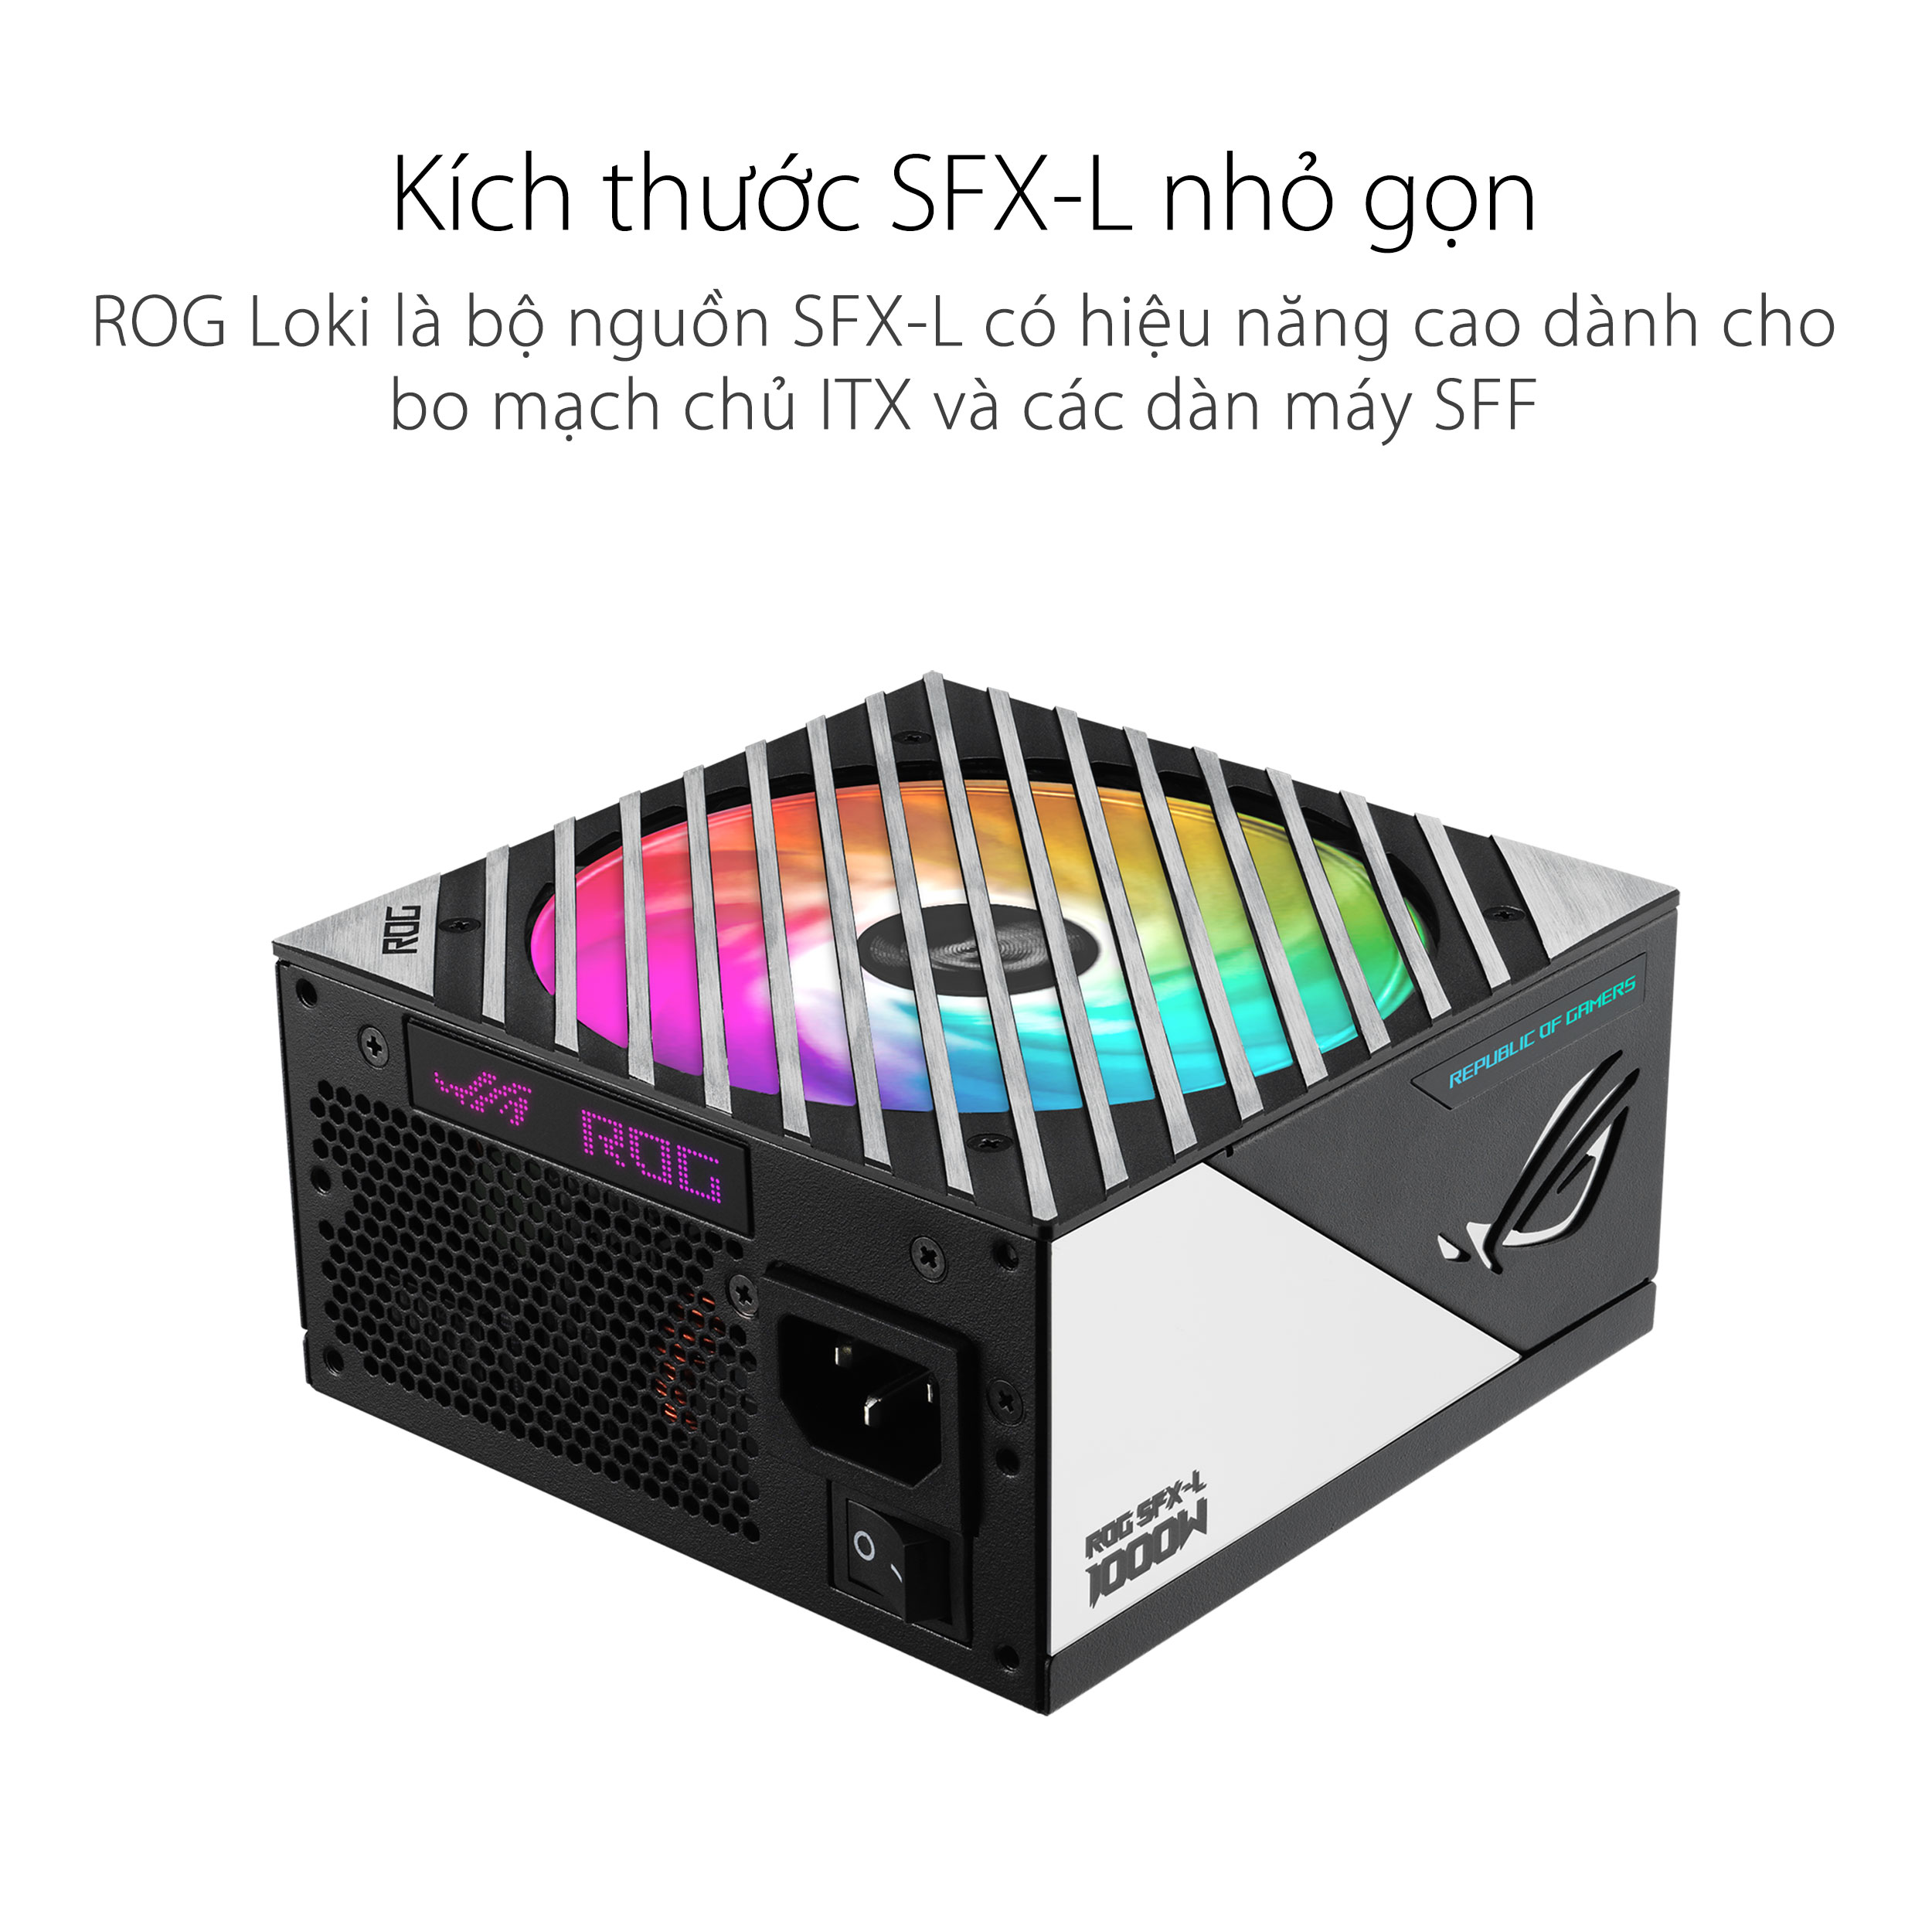 Nguồn Asus ROG Loki SFX-L 850W Platinum